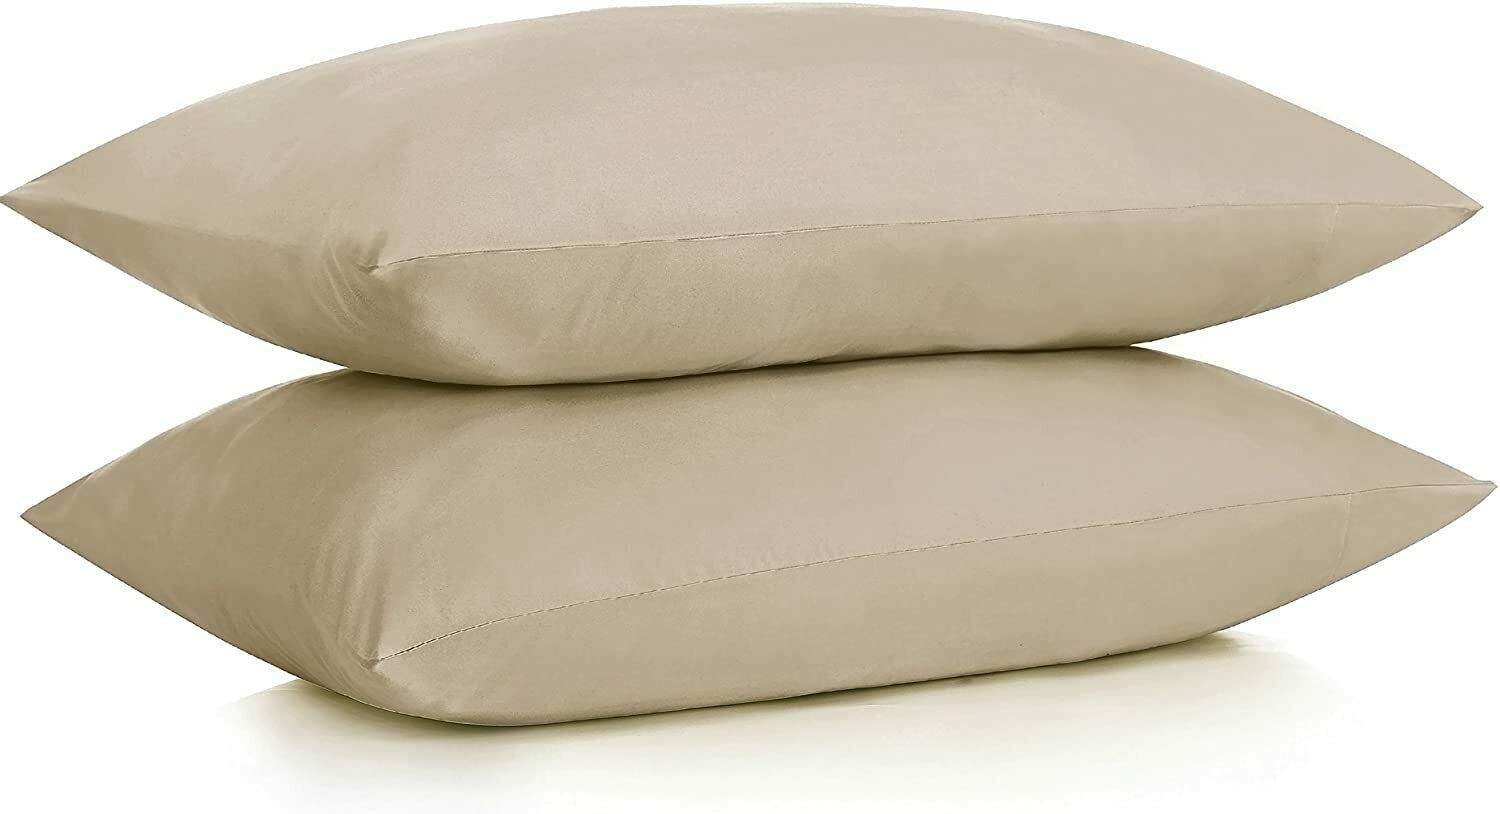 Luxury 100% Egyptian cotton Pillow Cases Pair 200TC Housewife Pillows Covers BedandbathLinen